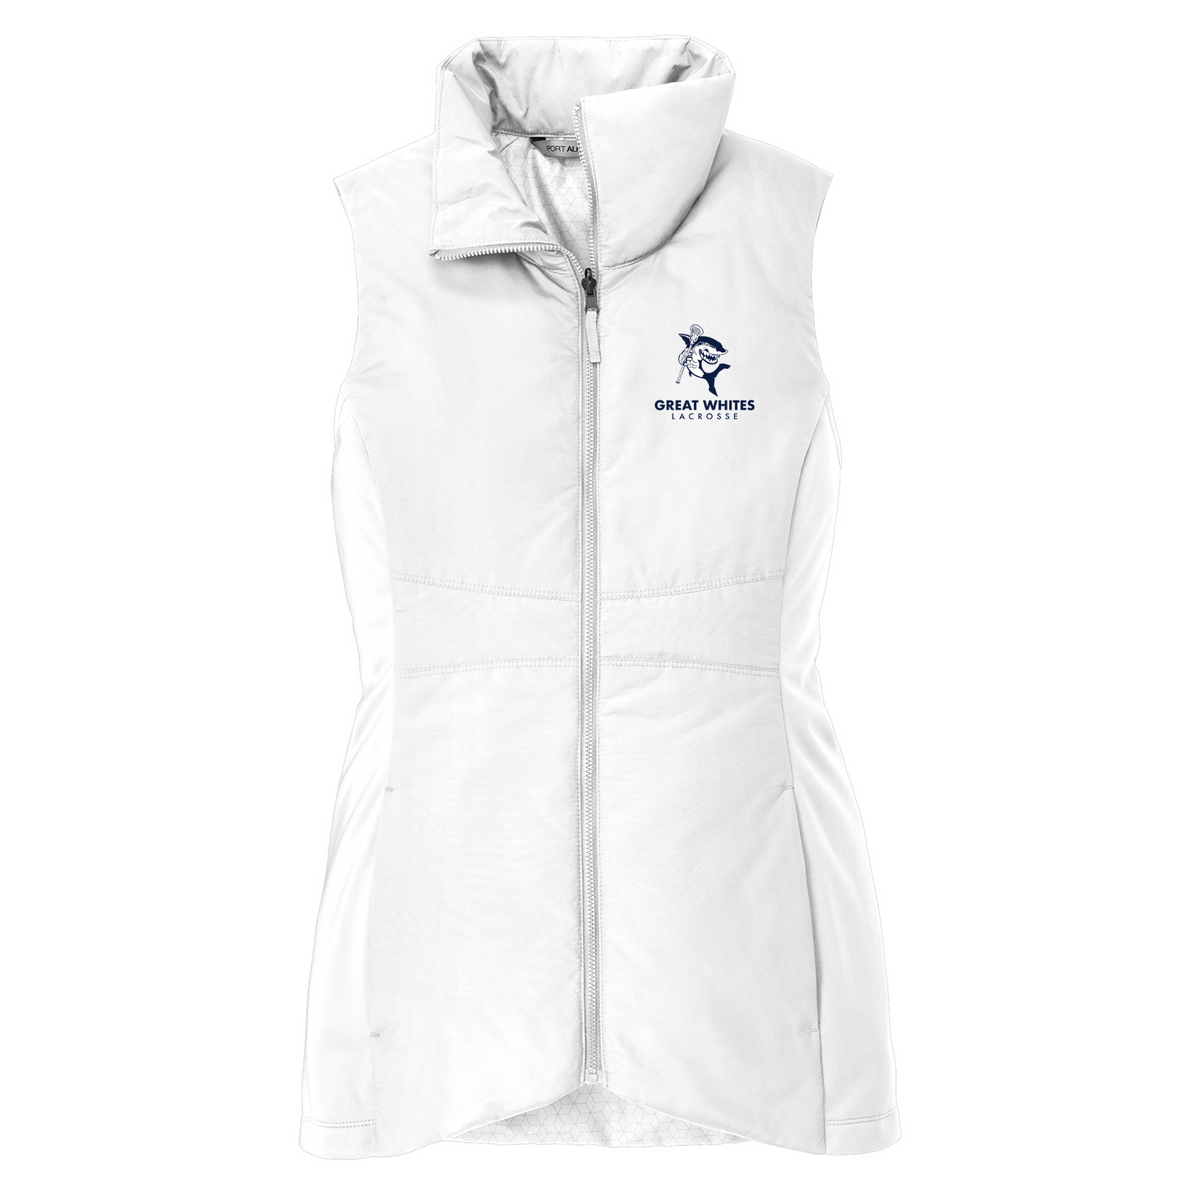 Great Whites Lacrosse Women's Vest